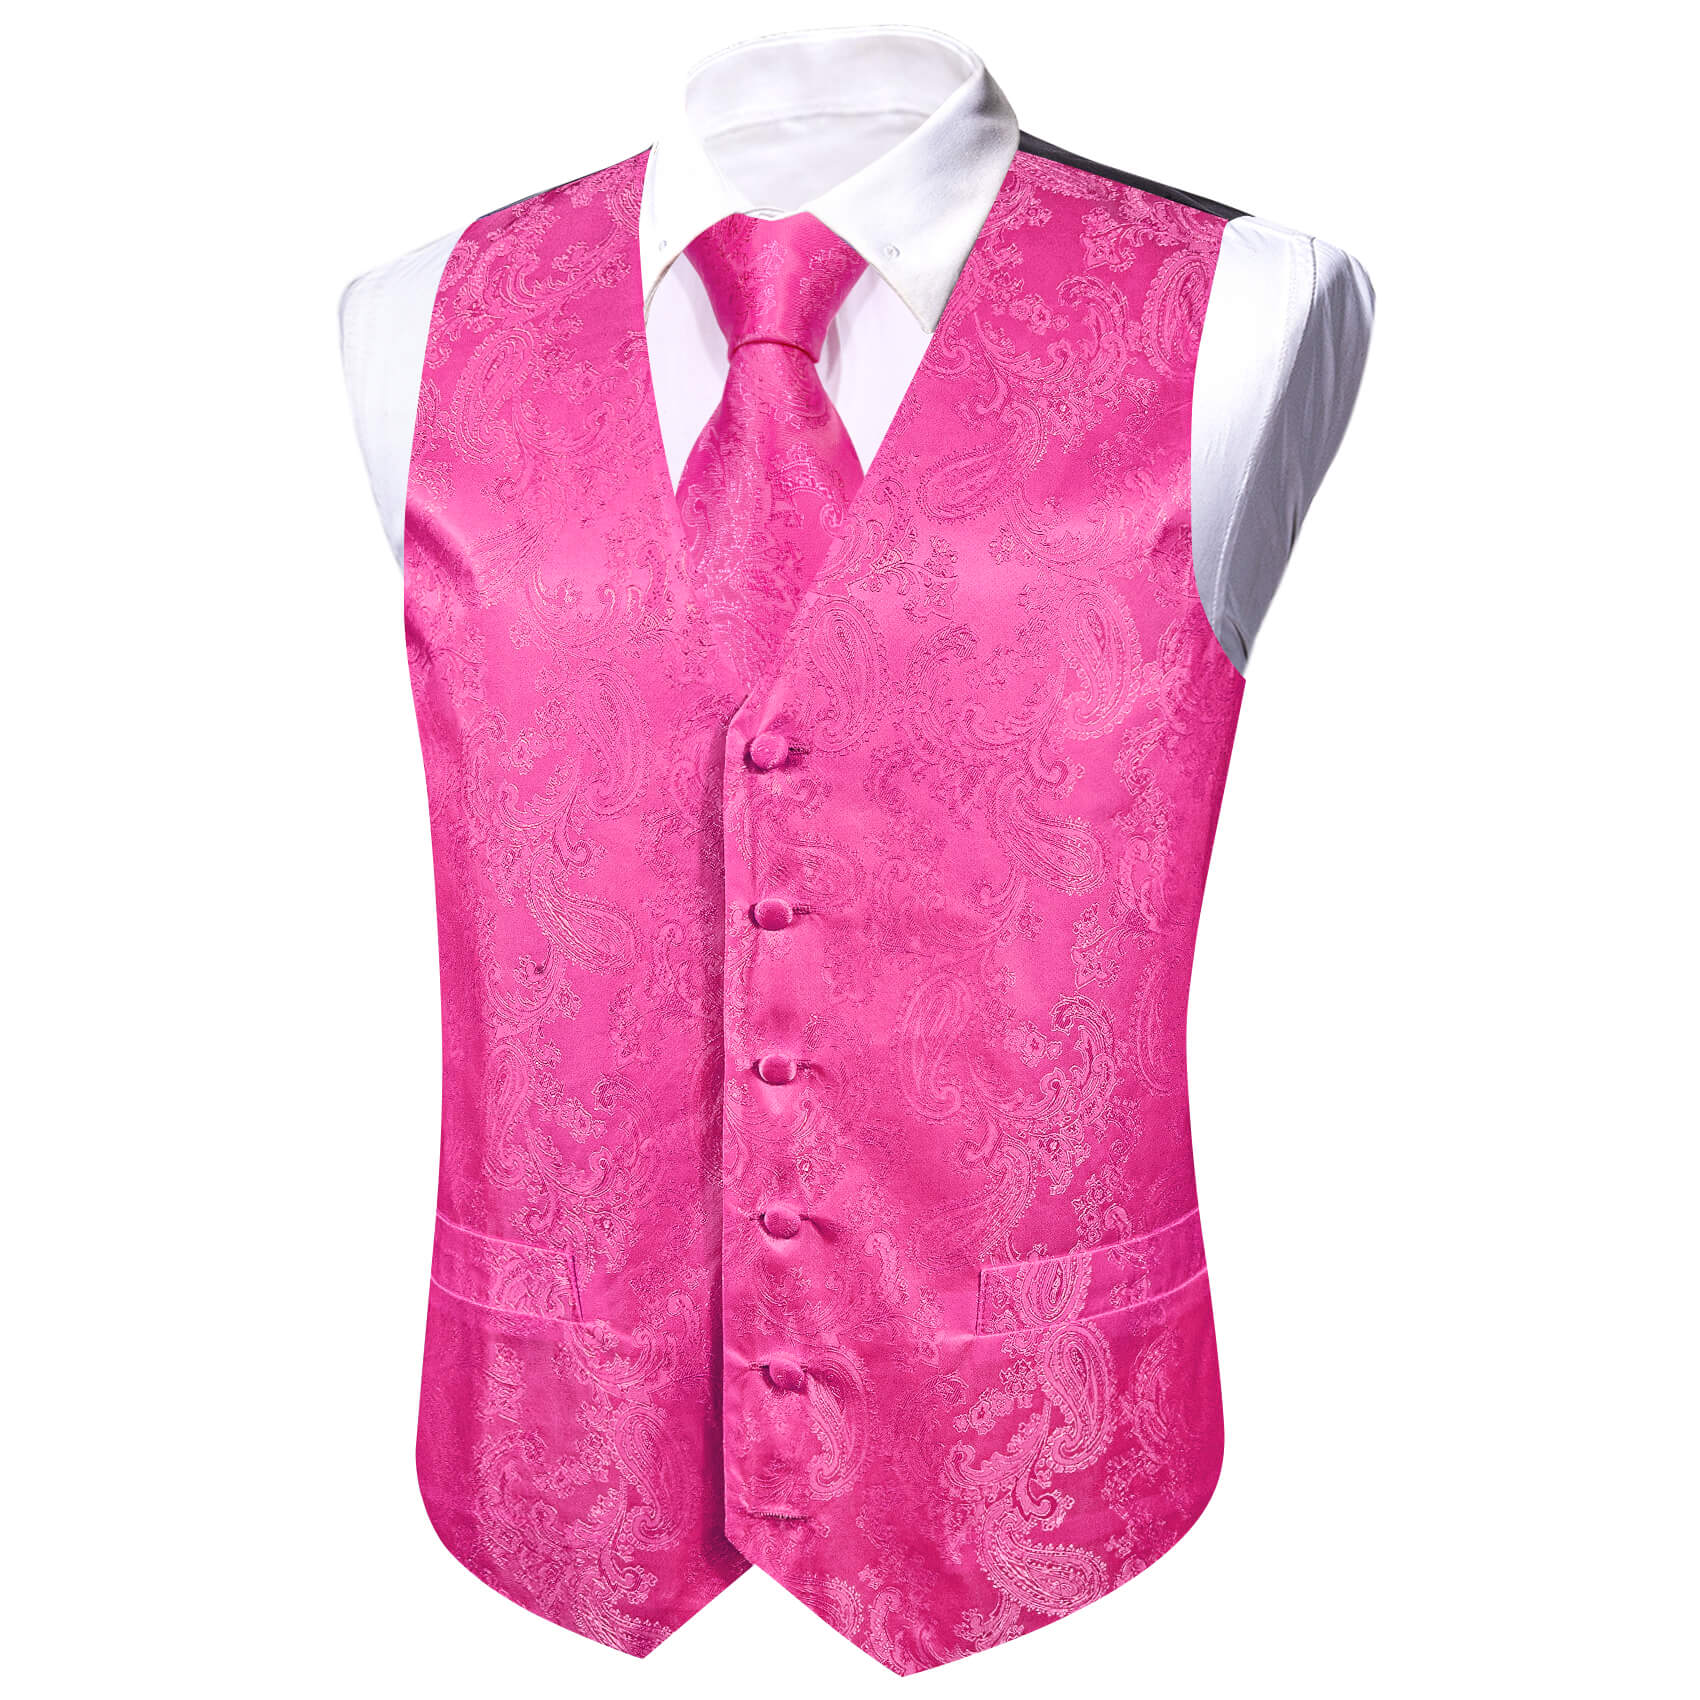  Hot Pink Paisley Vest